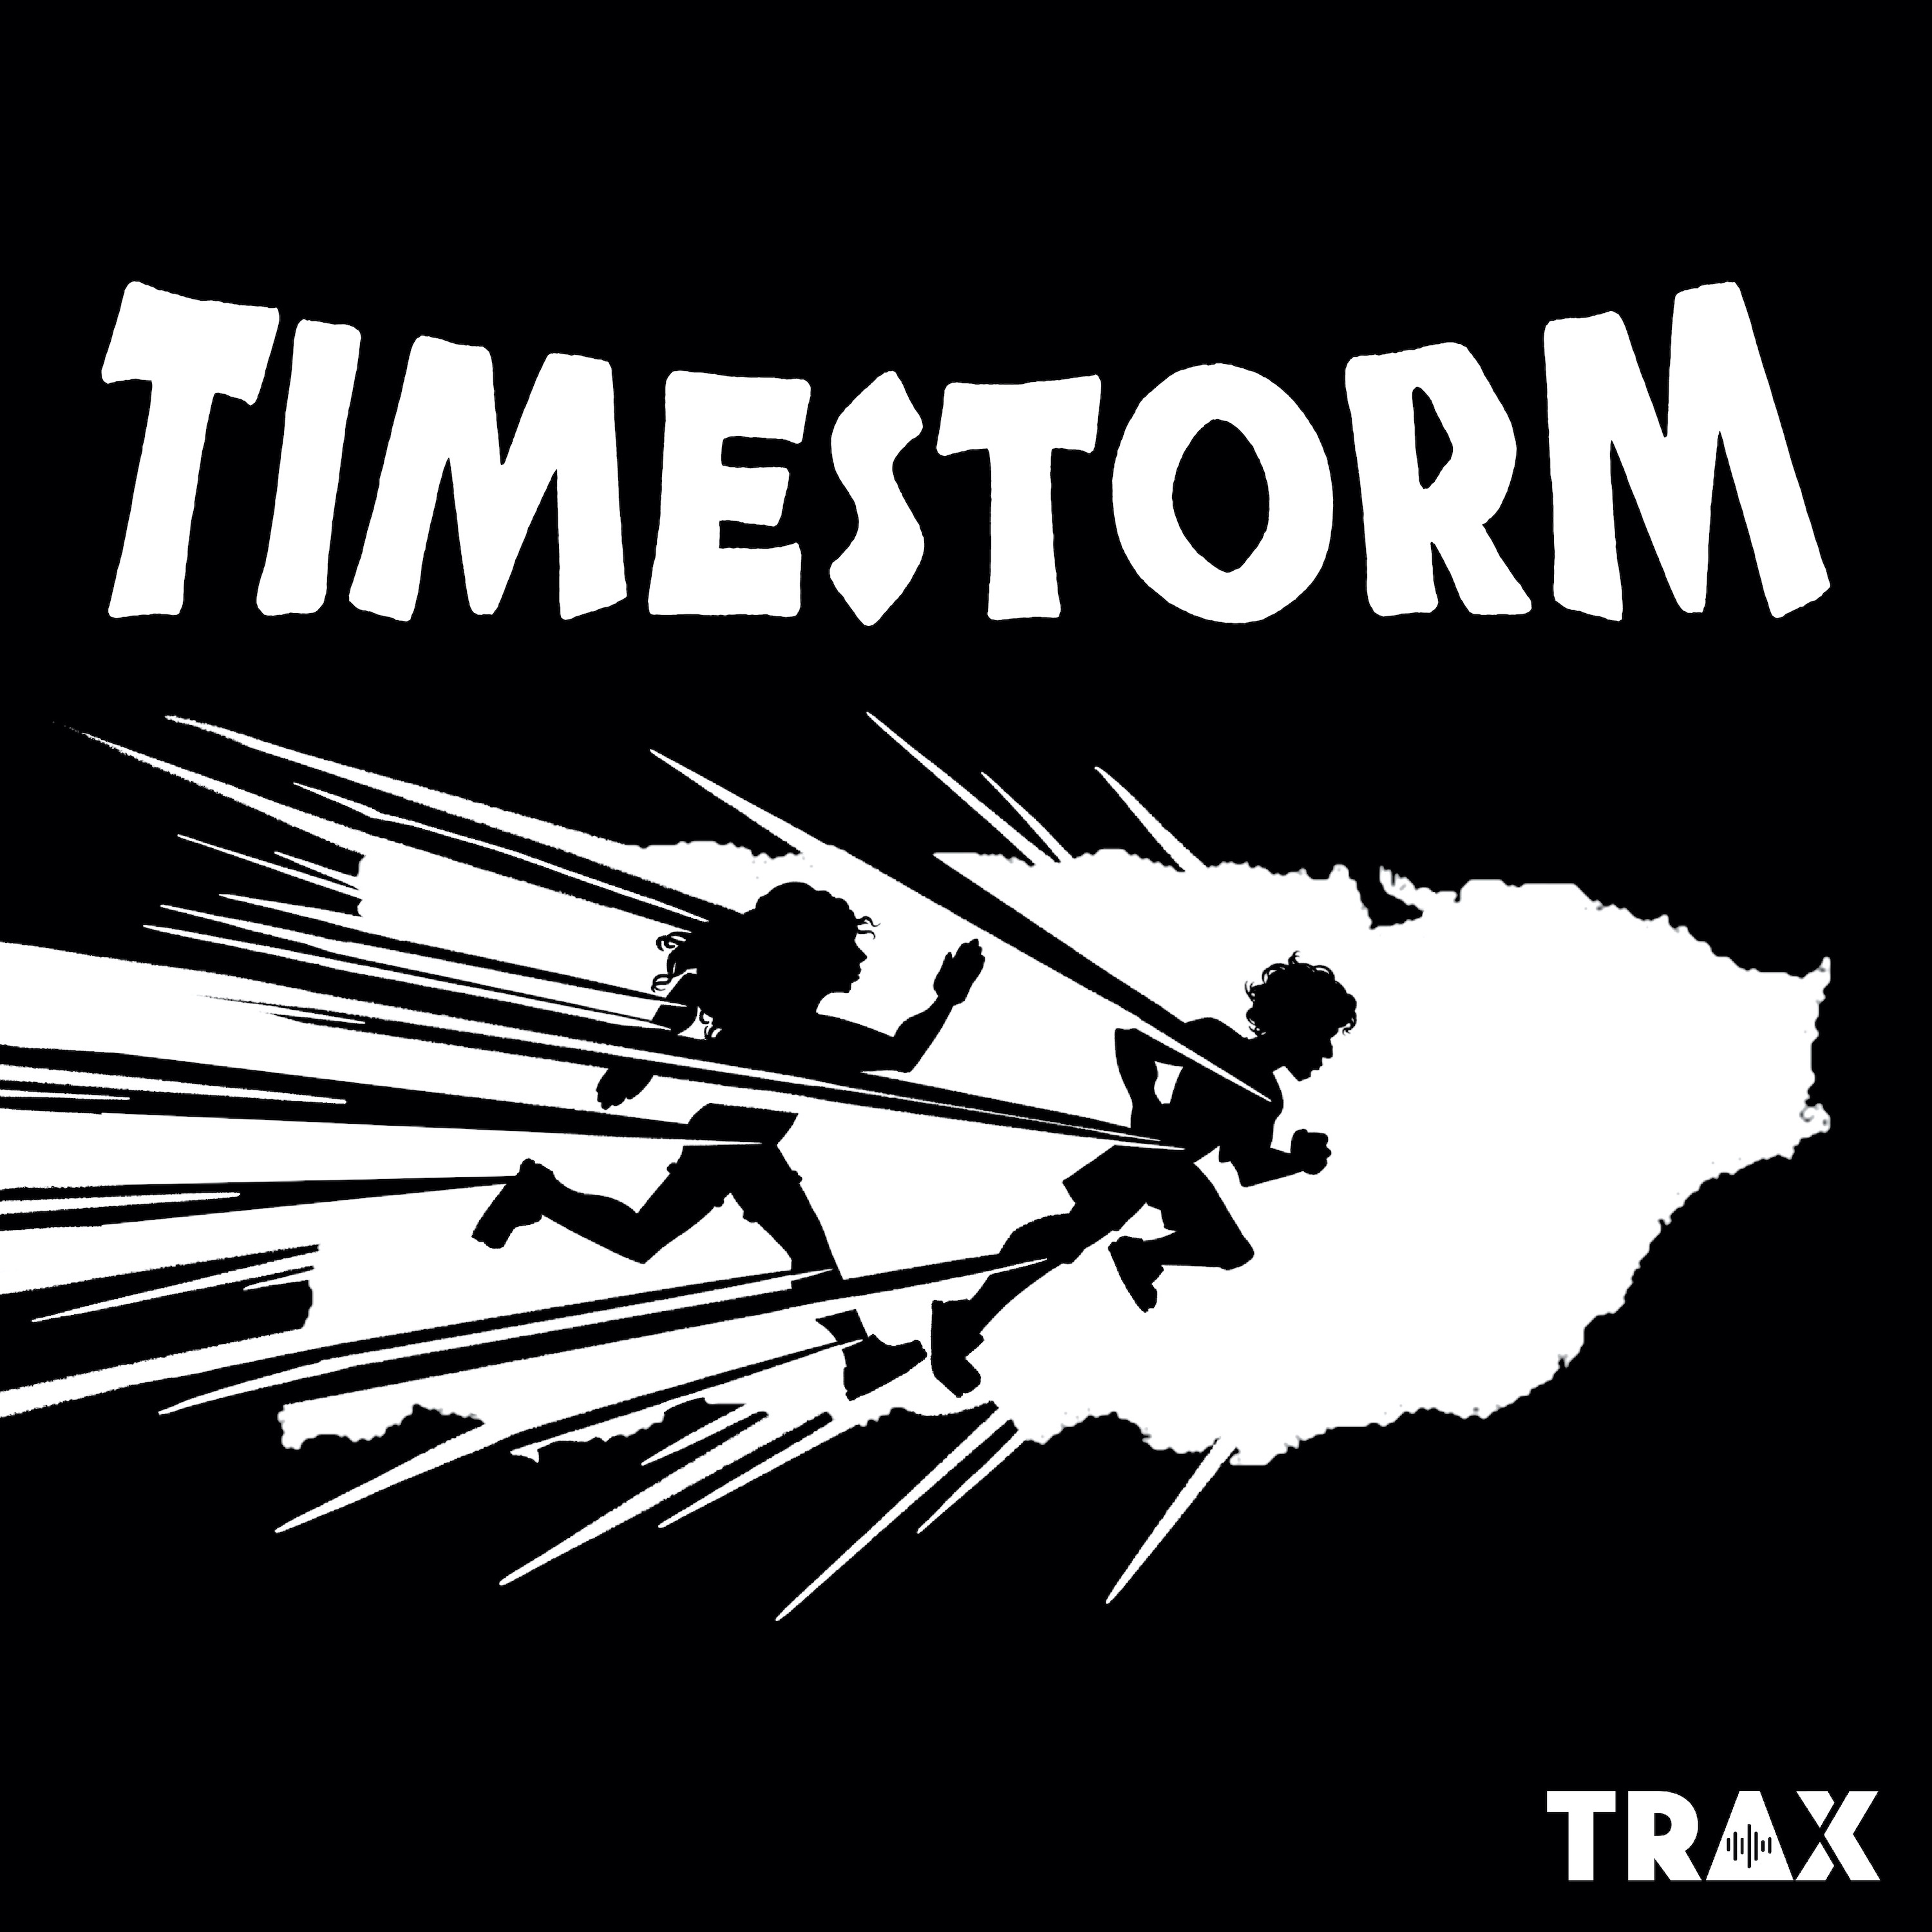 "Timestorm" Podcast